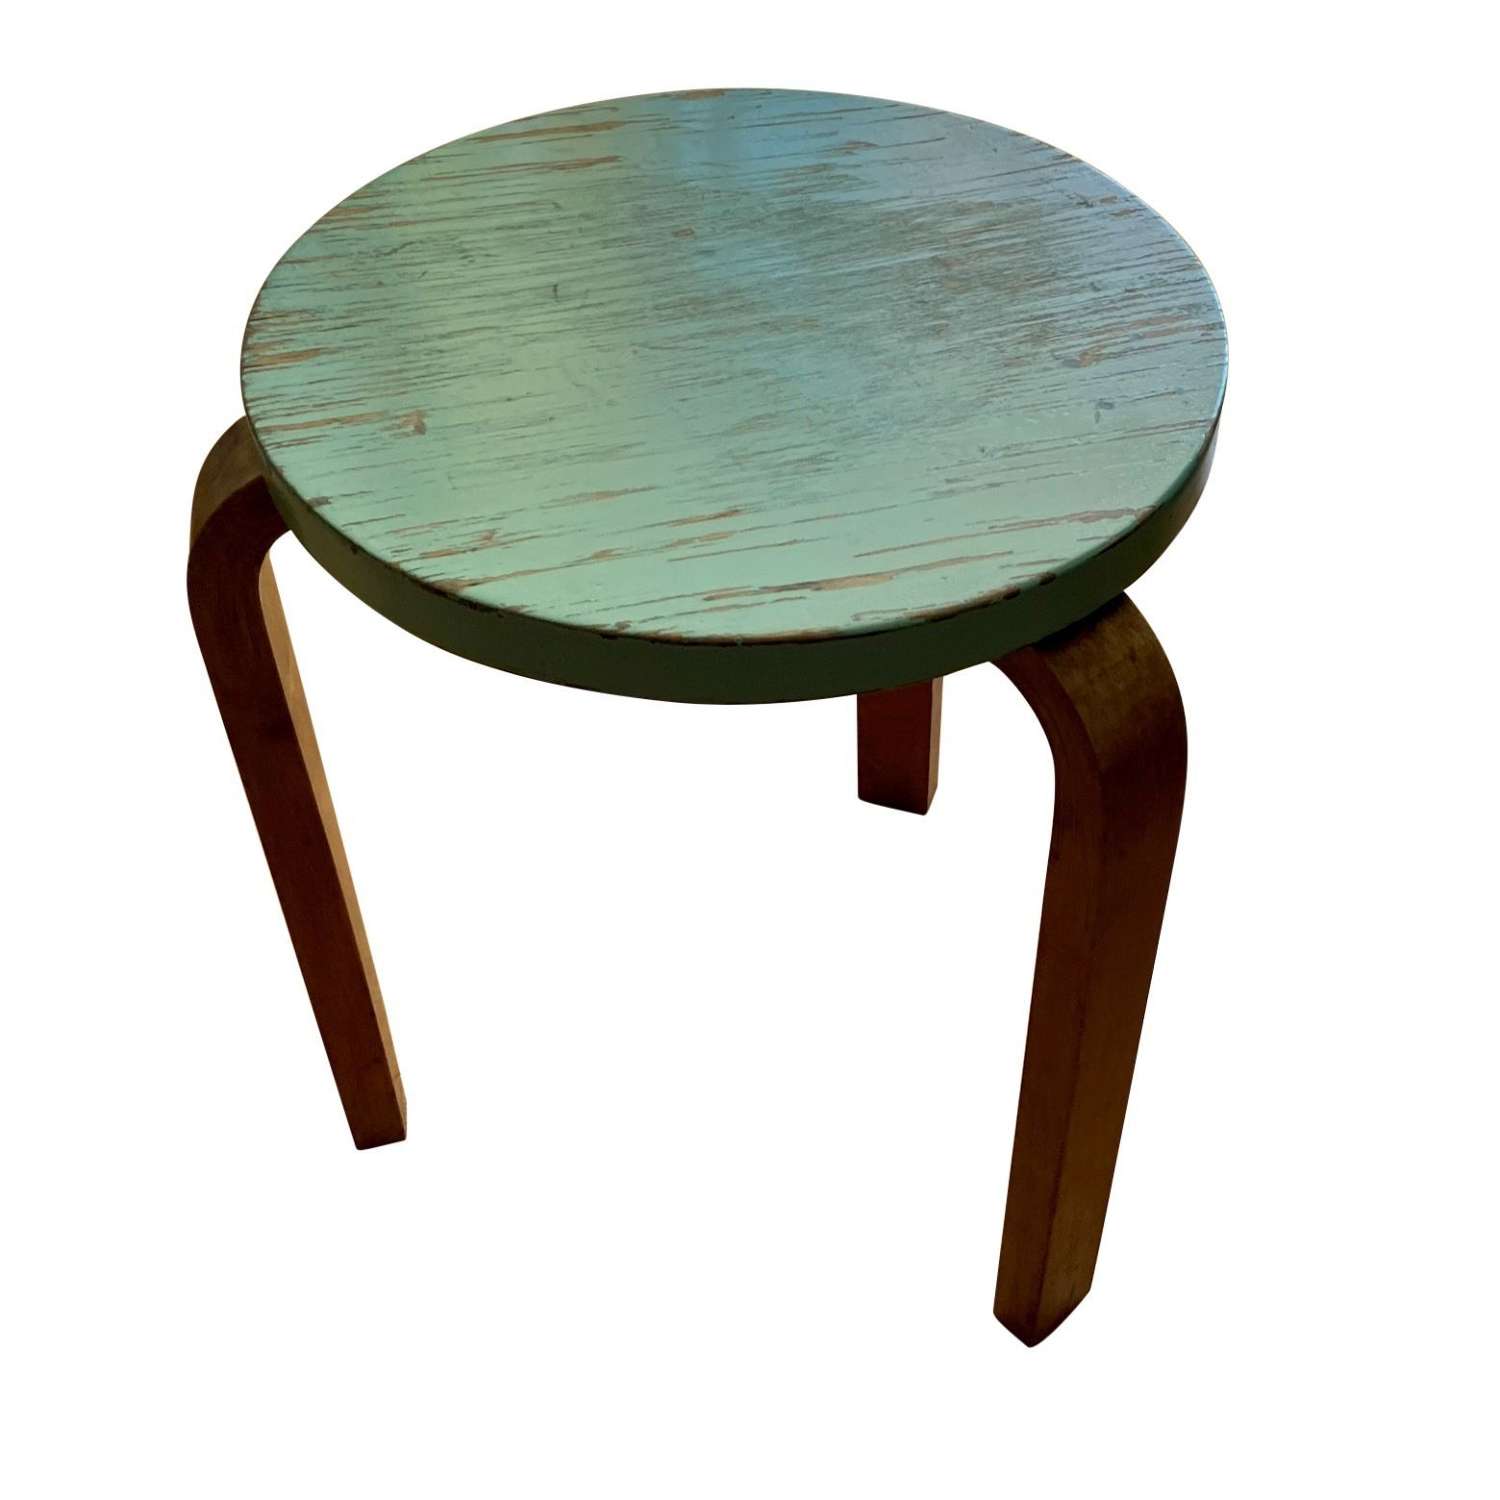 Original rare 1930's Alvar Aalto mint coloured stool, Finland